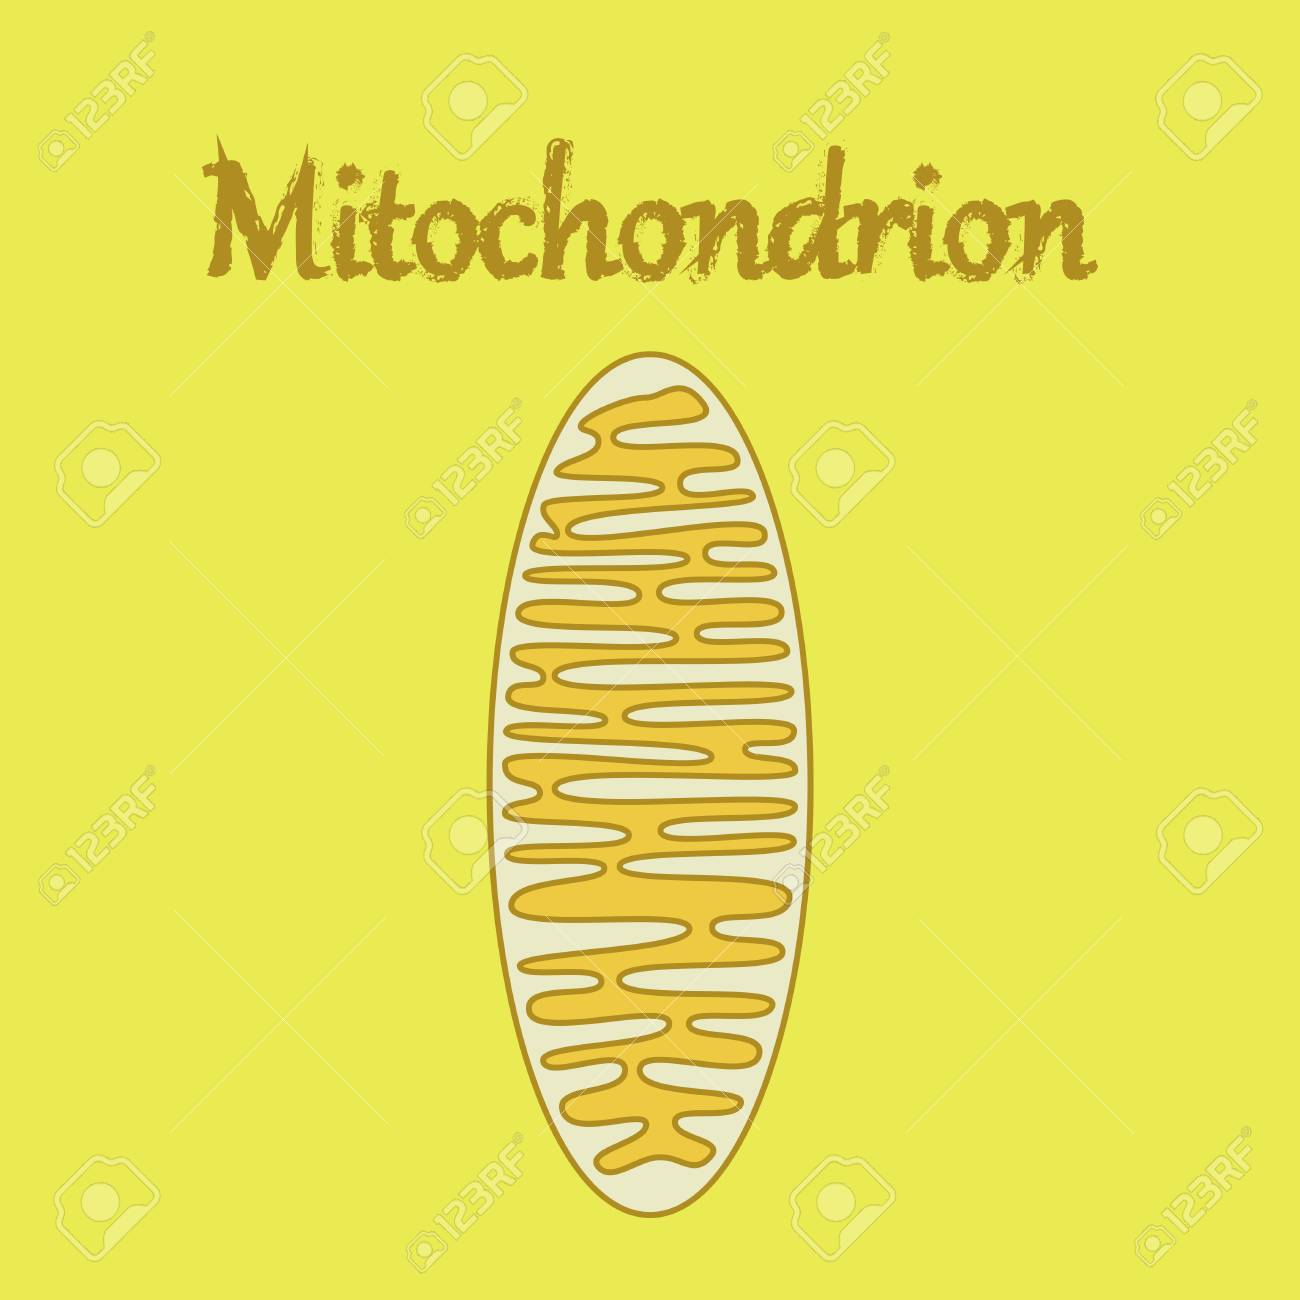 Mitochondria icons | Noun Project